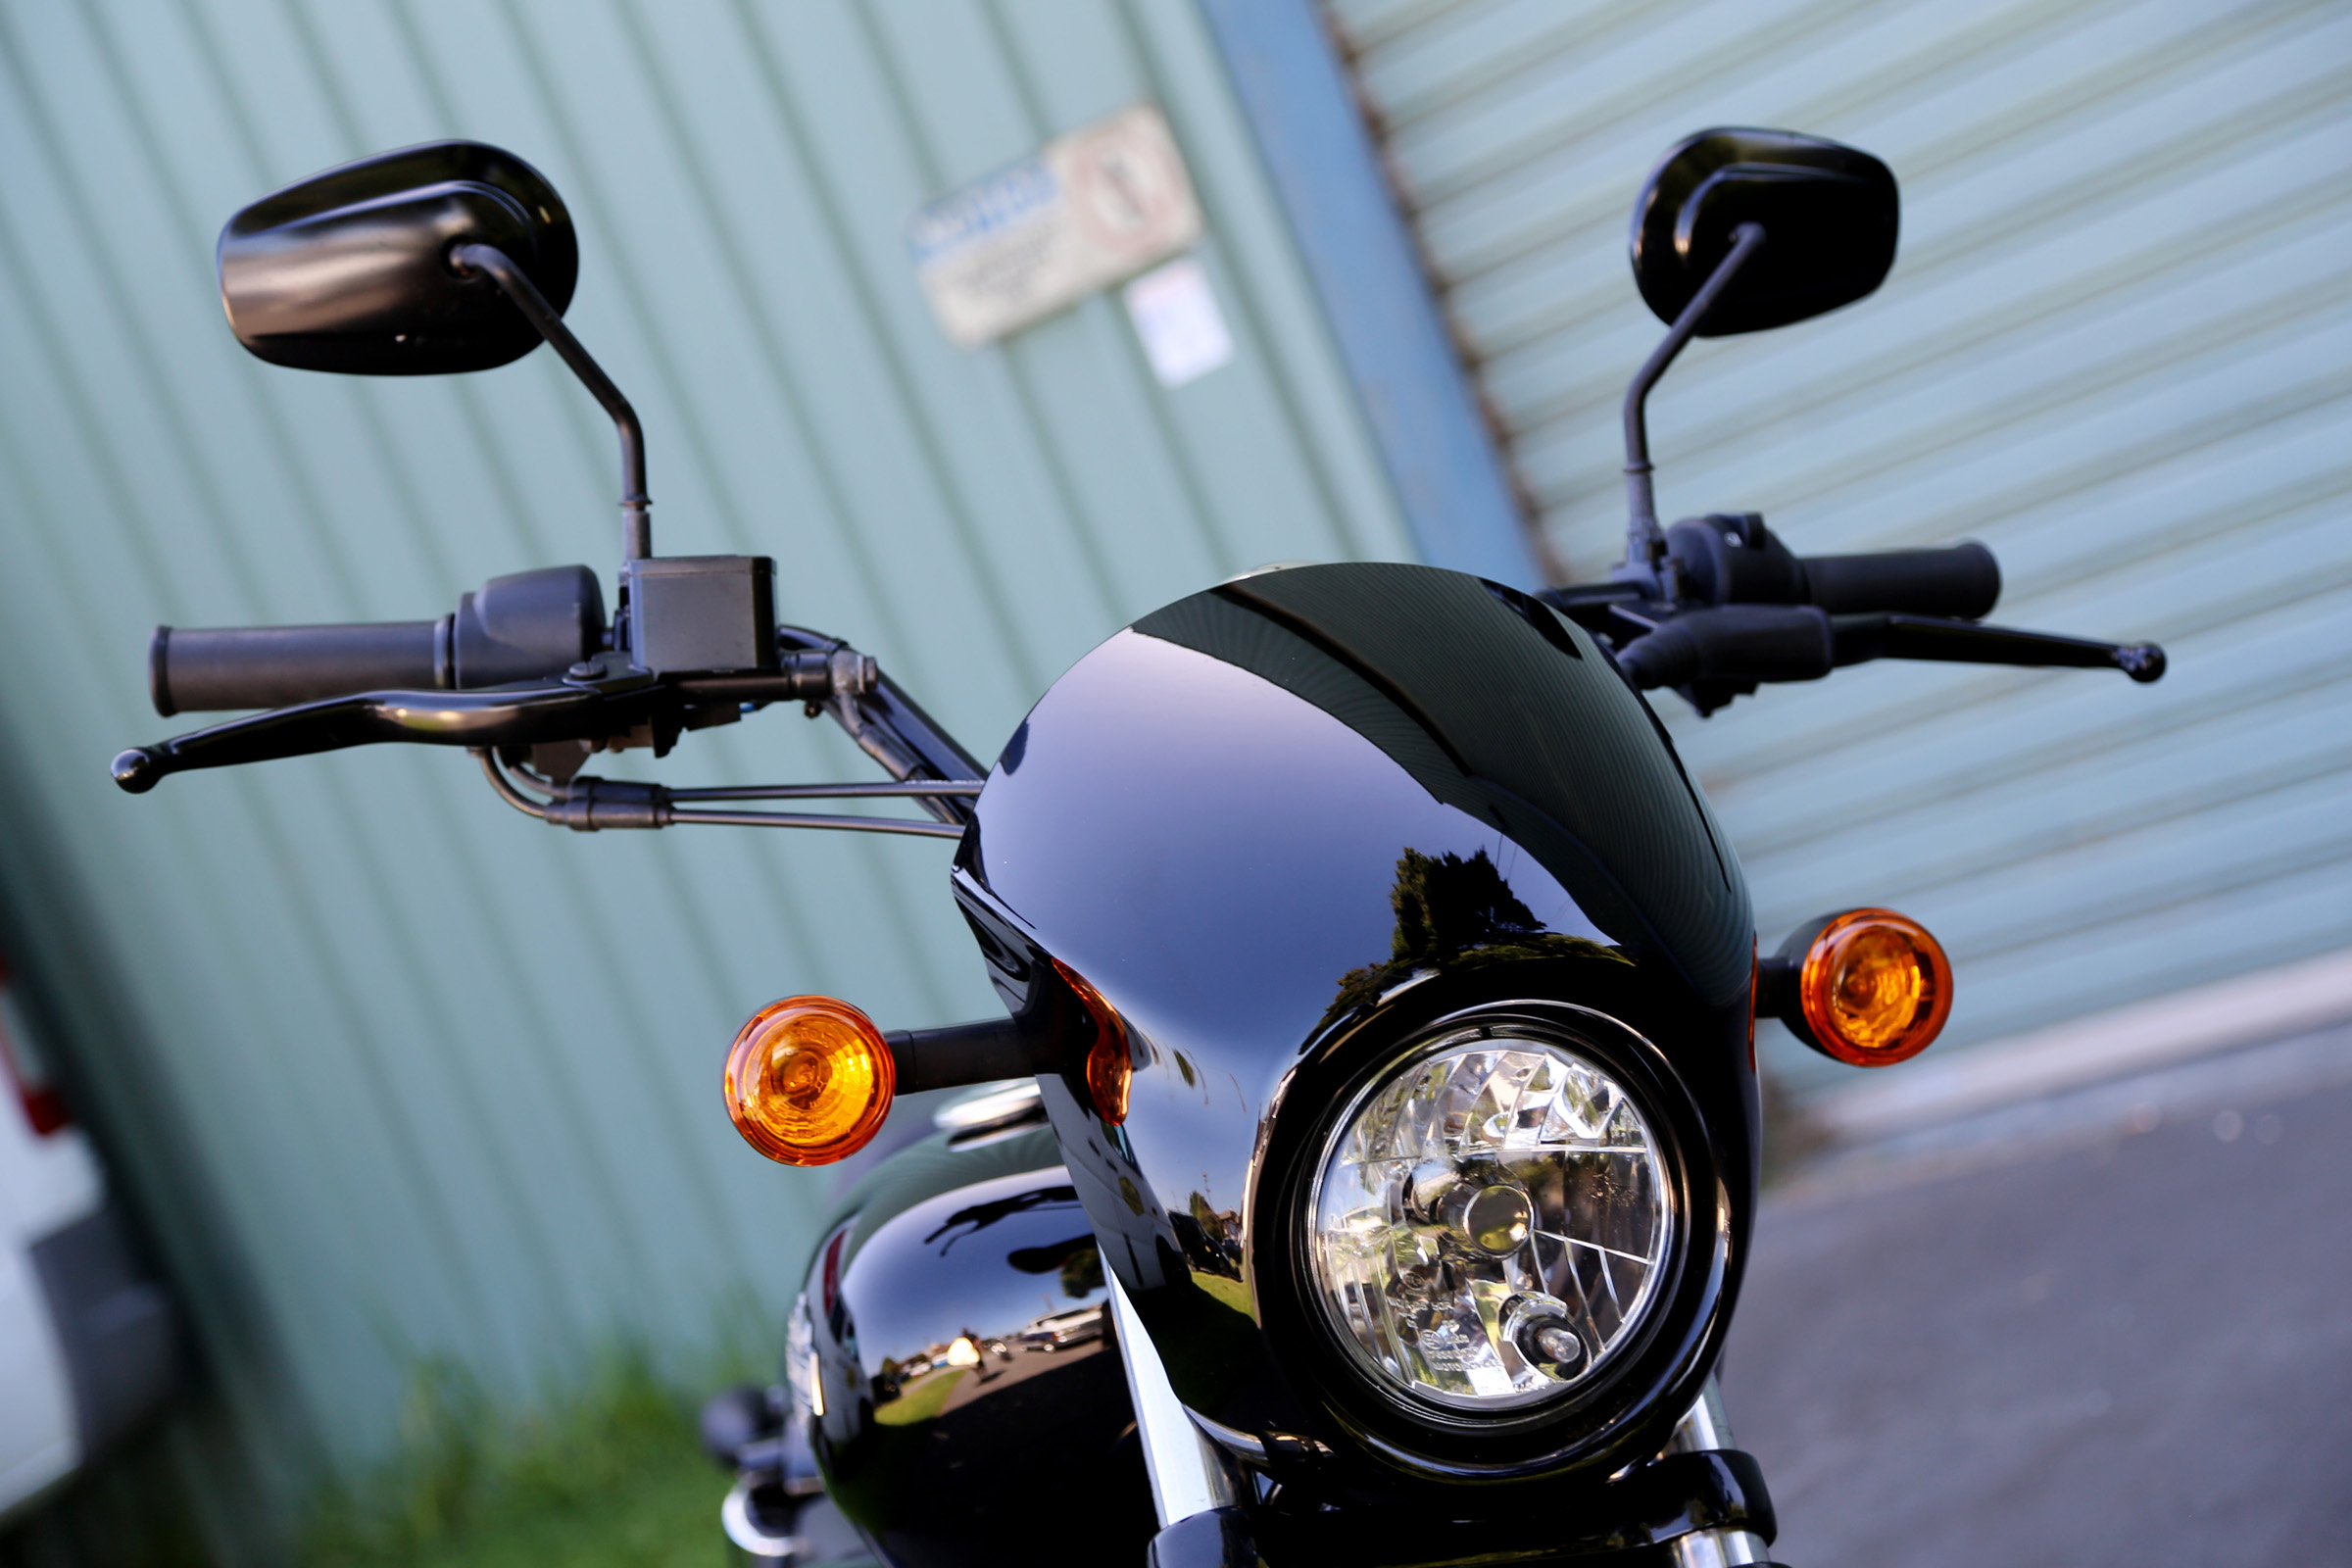 2019 Harley Davidson Street 500 XG500 detail10